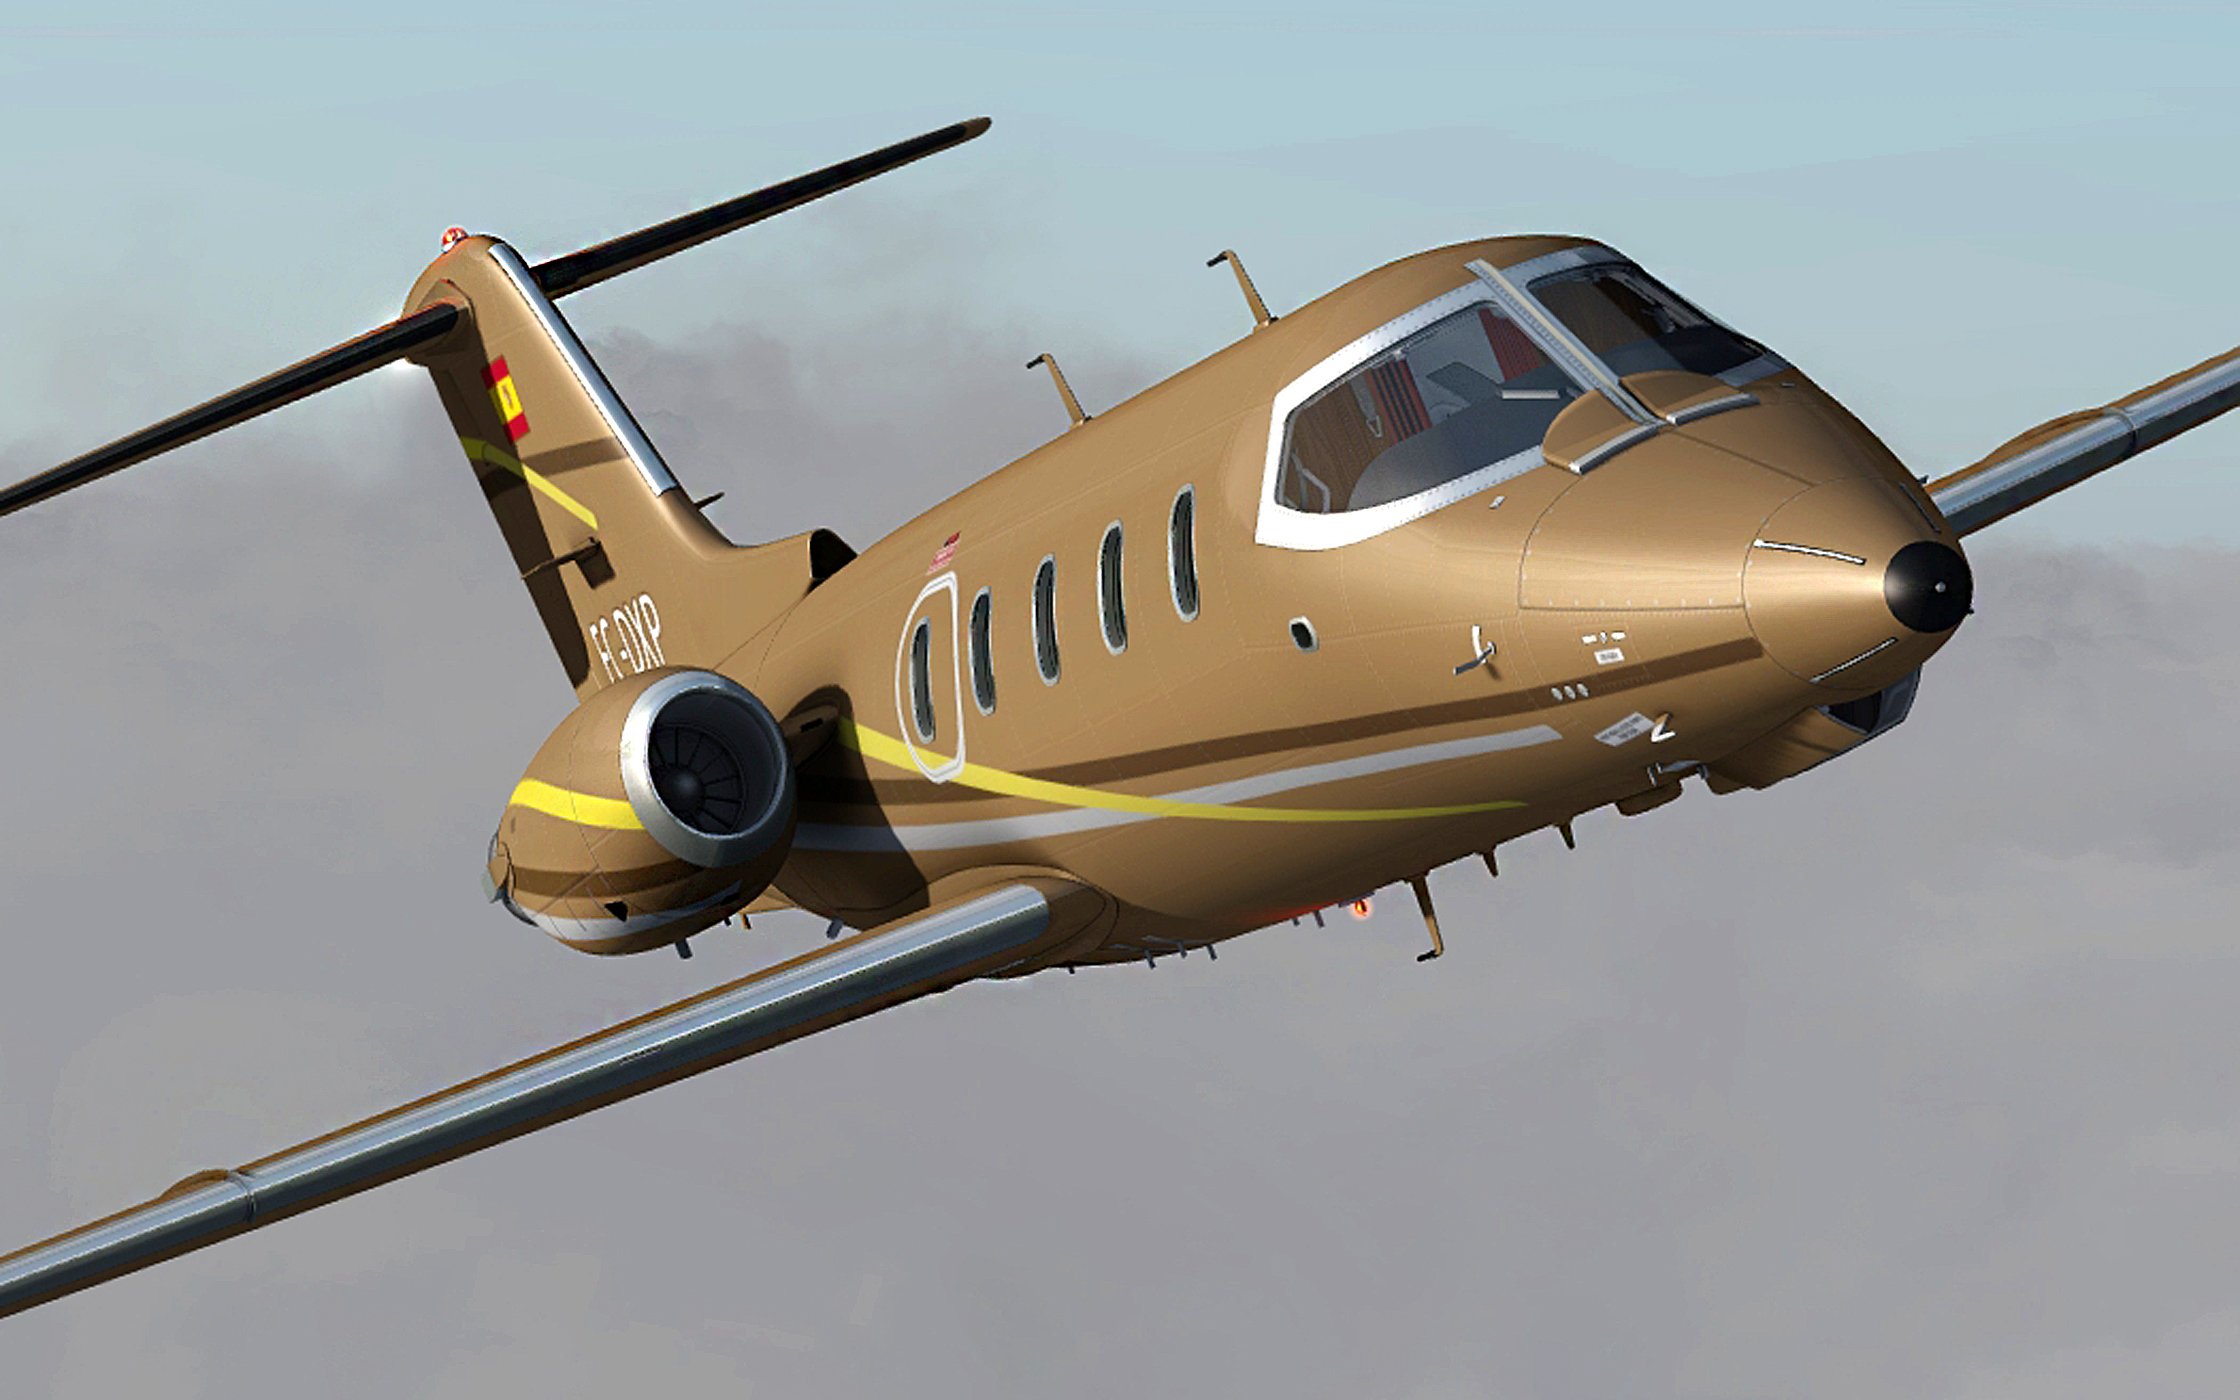 Flight Simulator XTreme